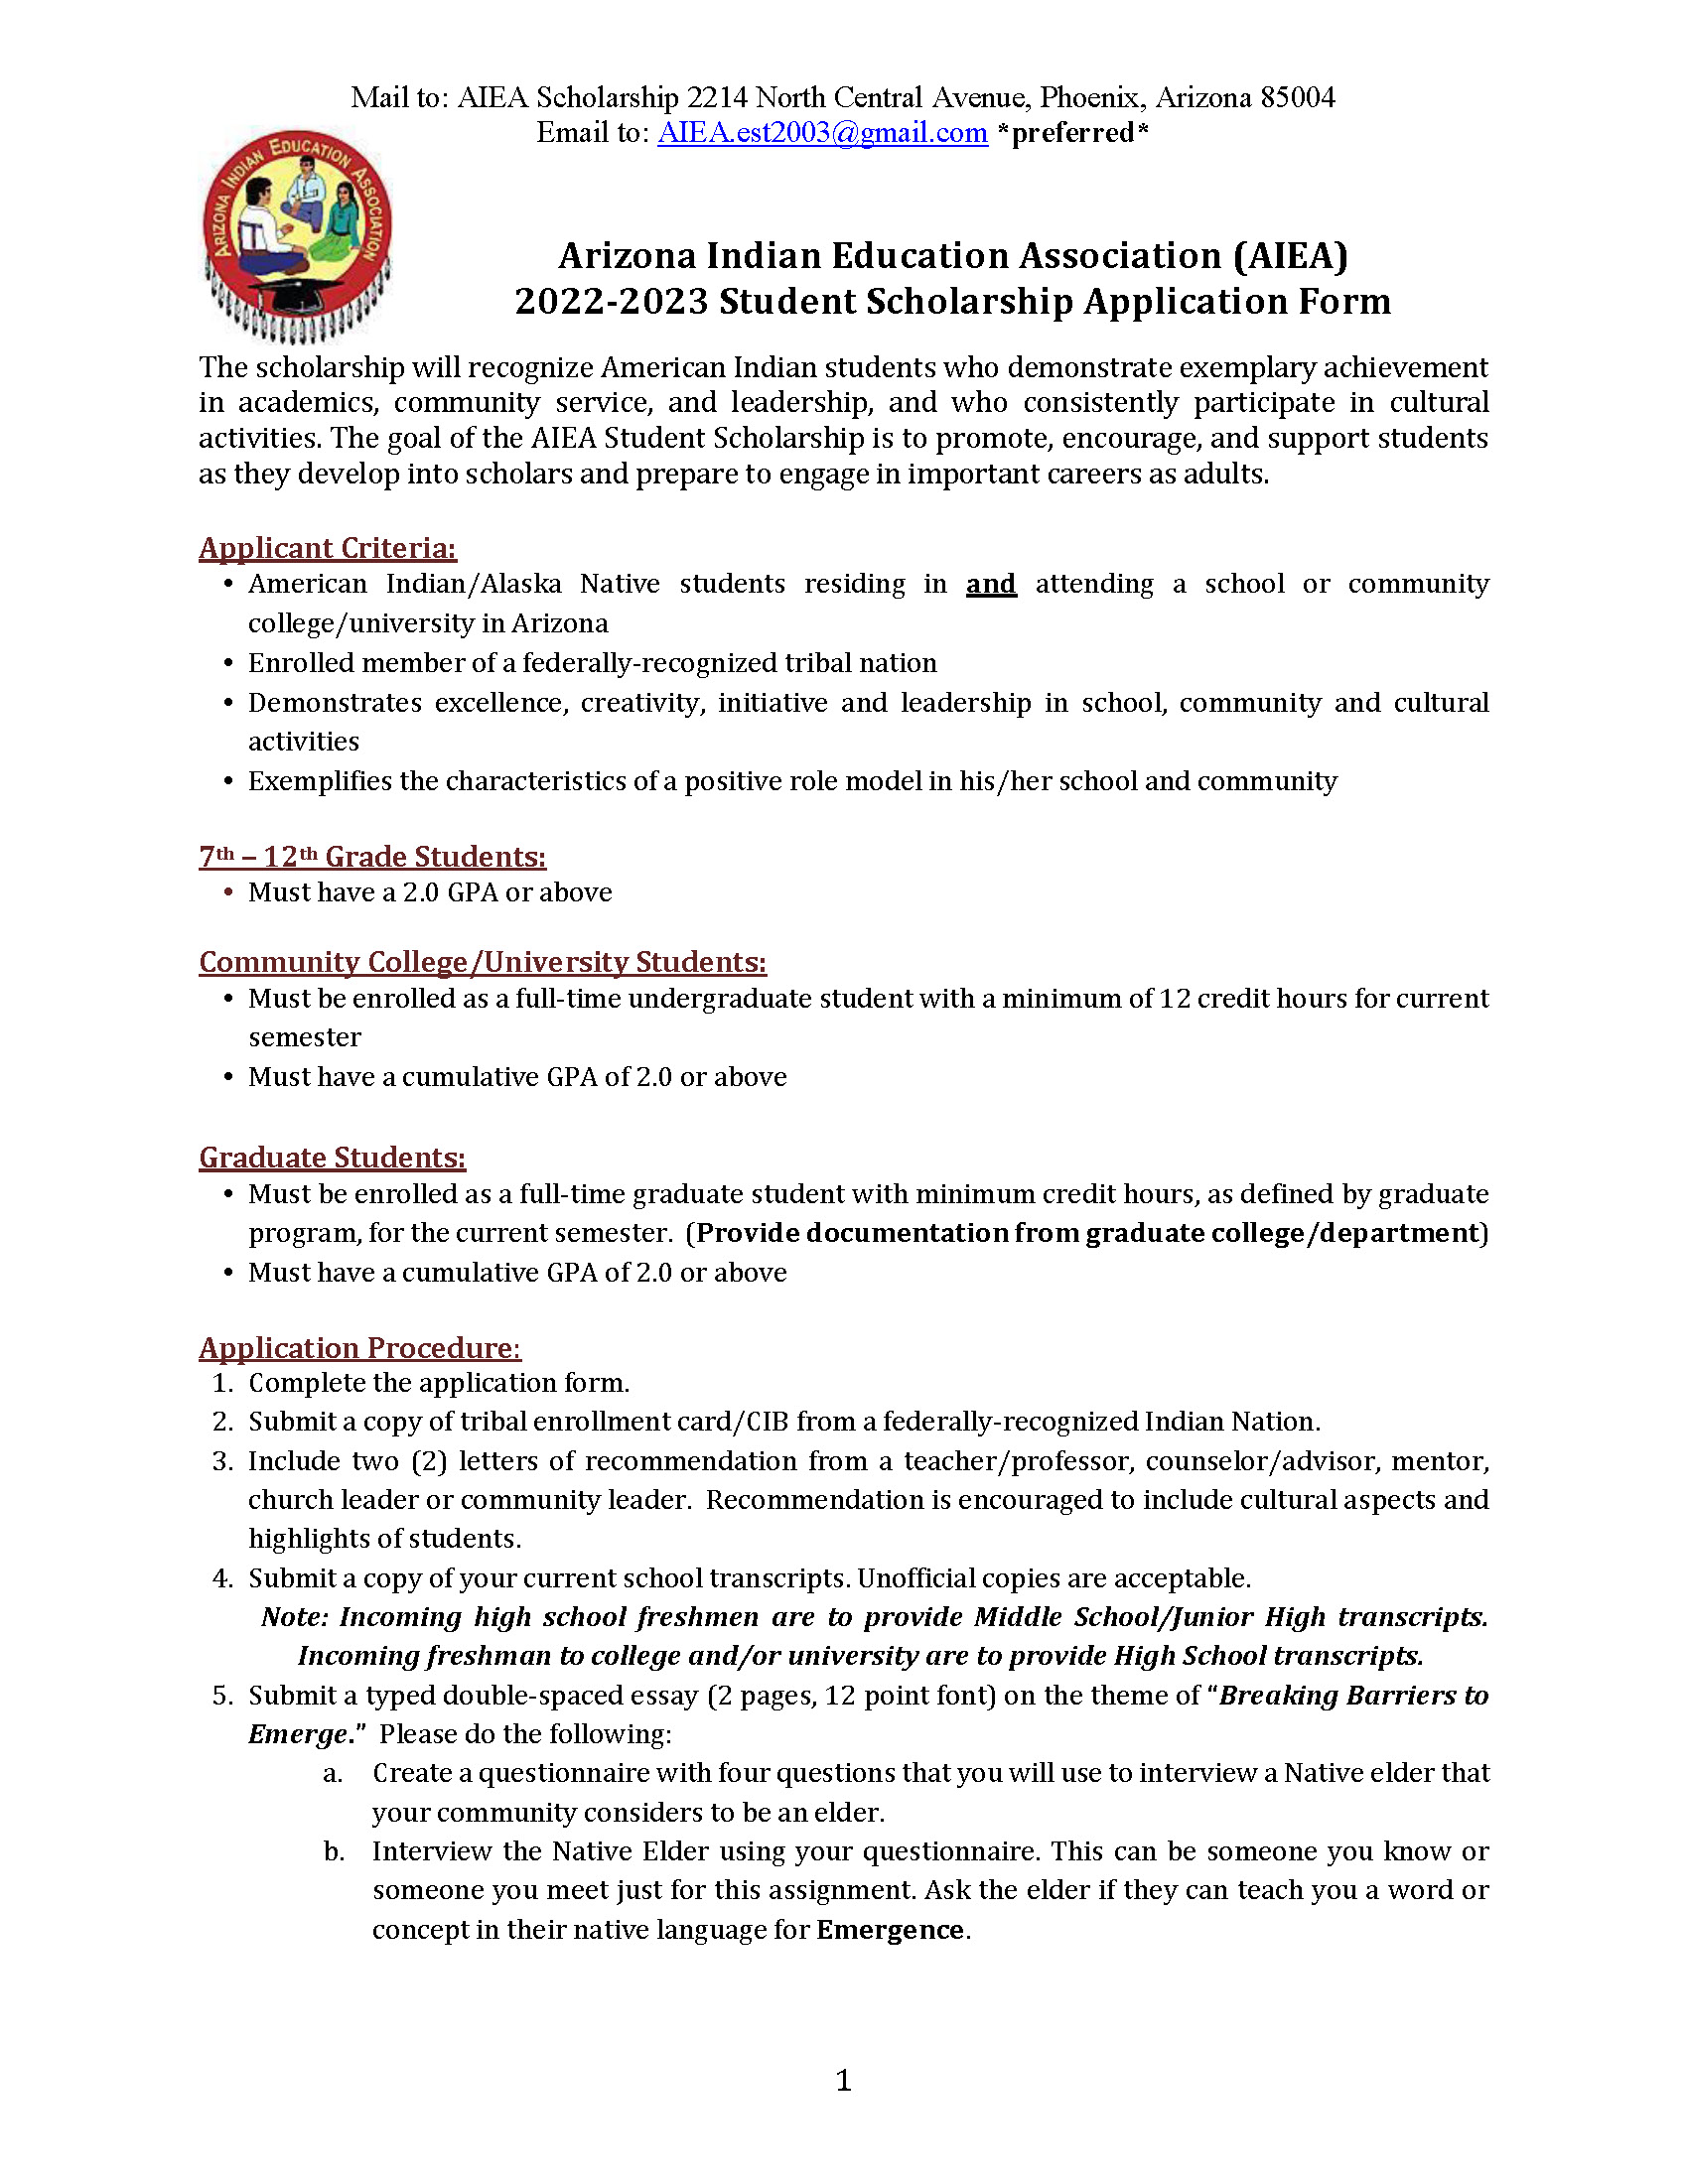 AIEA Scholarship Application